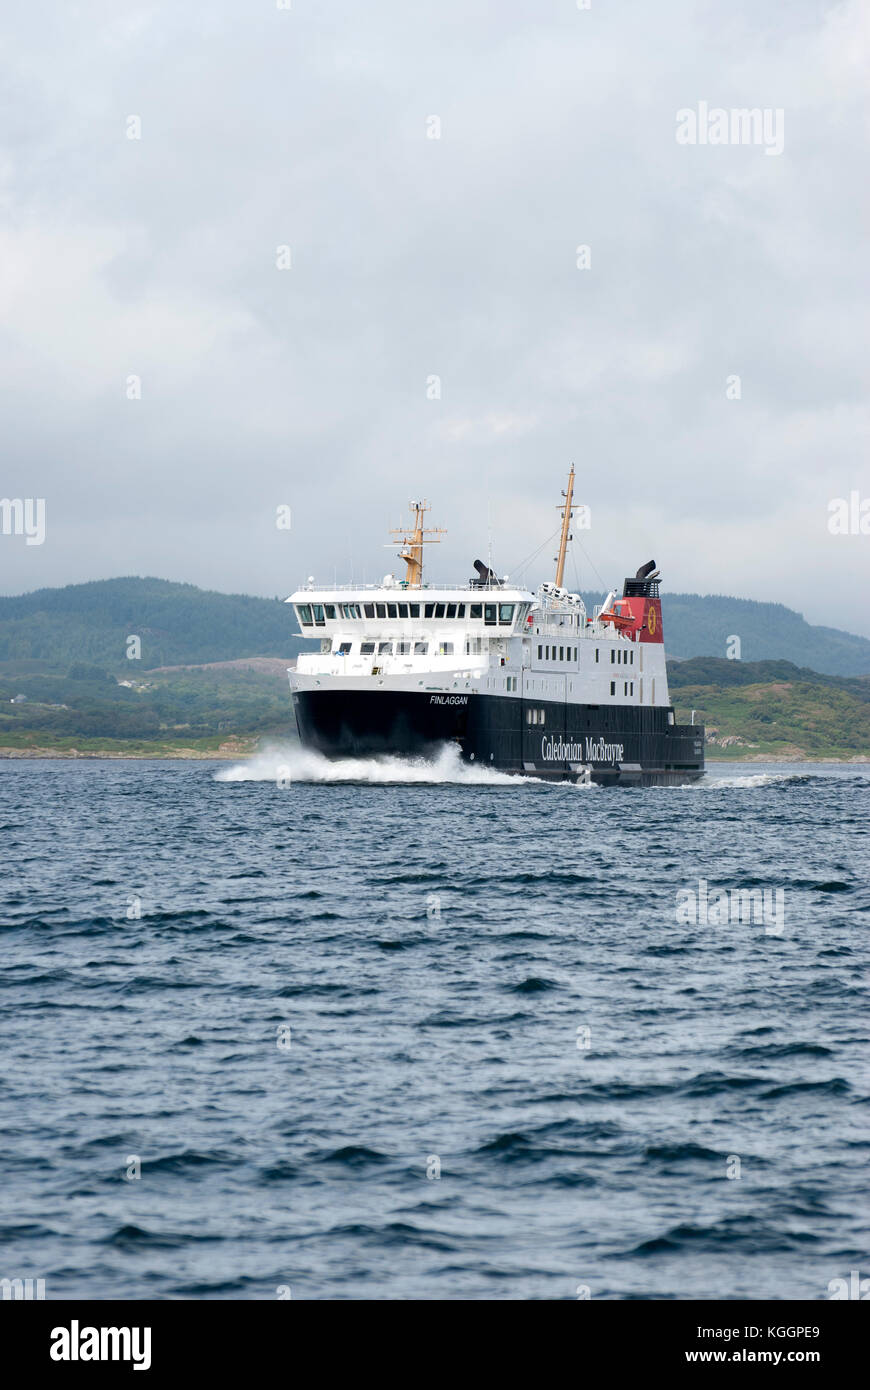 2011 M.V. Finlaggan Islay Ecosse Ferry de son côté bâbord vue portrait de caledonian macbrayne rouge blanc noir ro-ro Calmac roll on roll off dr Banque D'Images